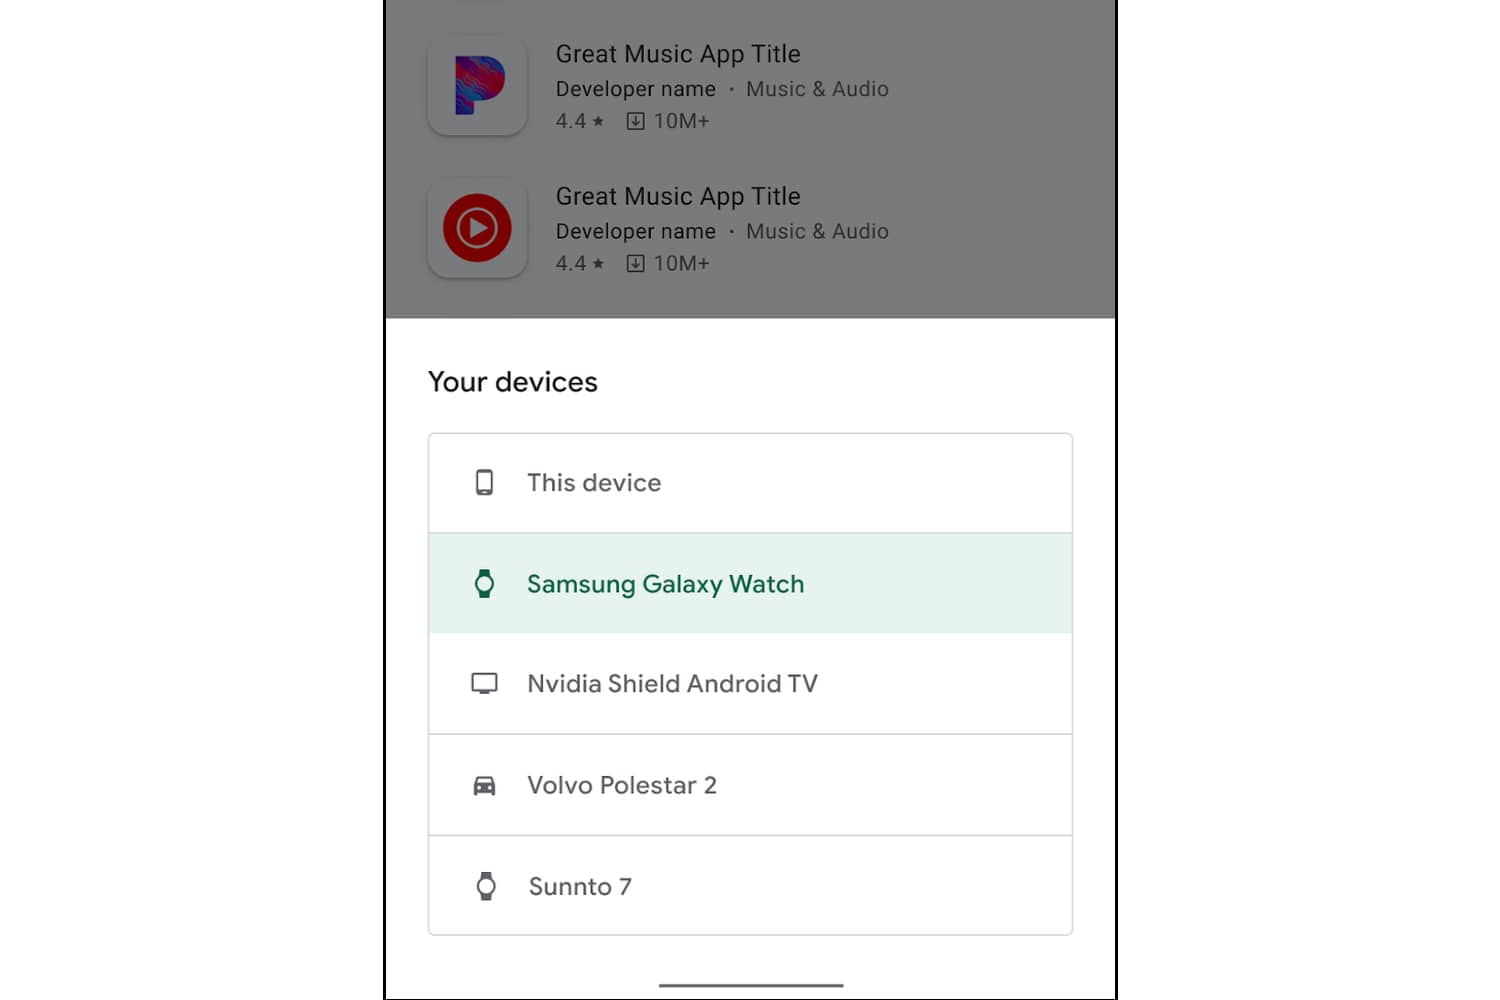 Filtro de búsqueda de Google Play Store para dispositivos que no sean teléfonos.